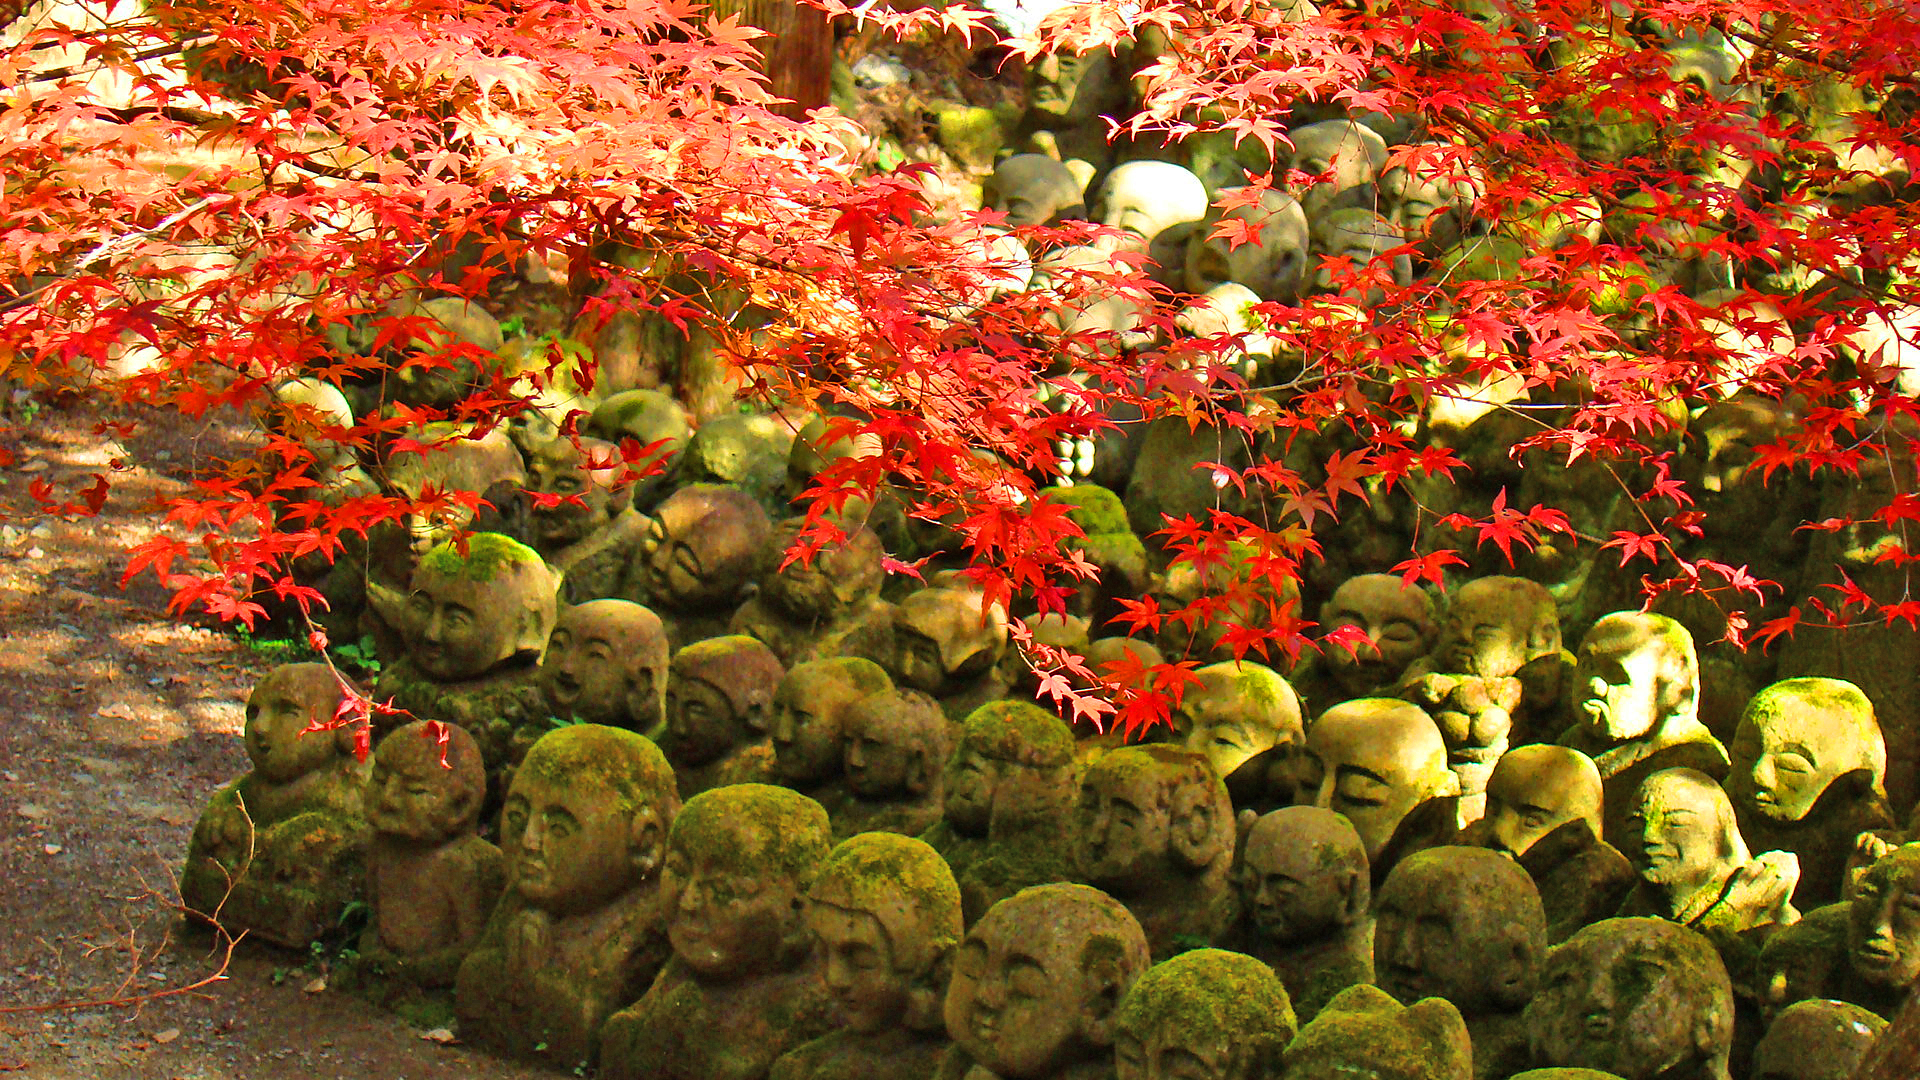 Otagi Nenbutsu-ji - rakan statues under autumn leaves